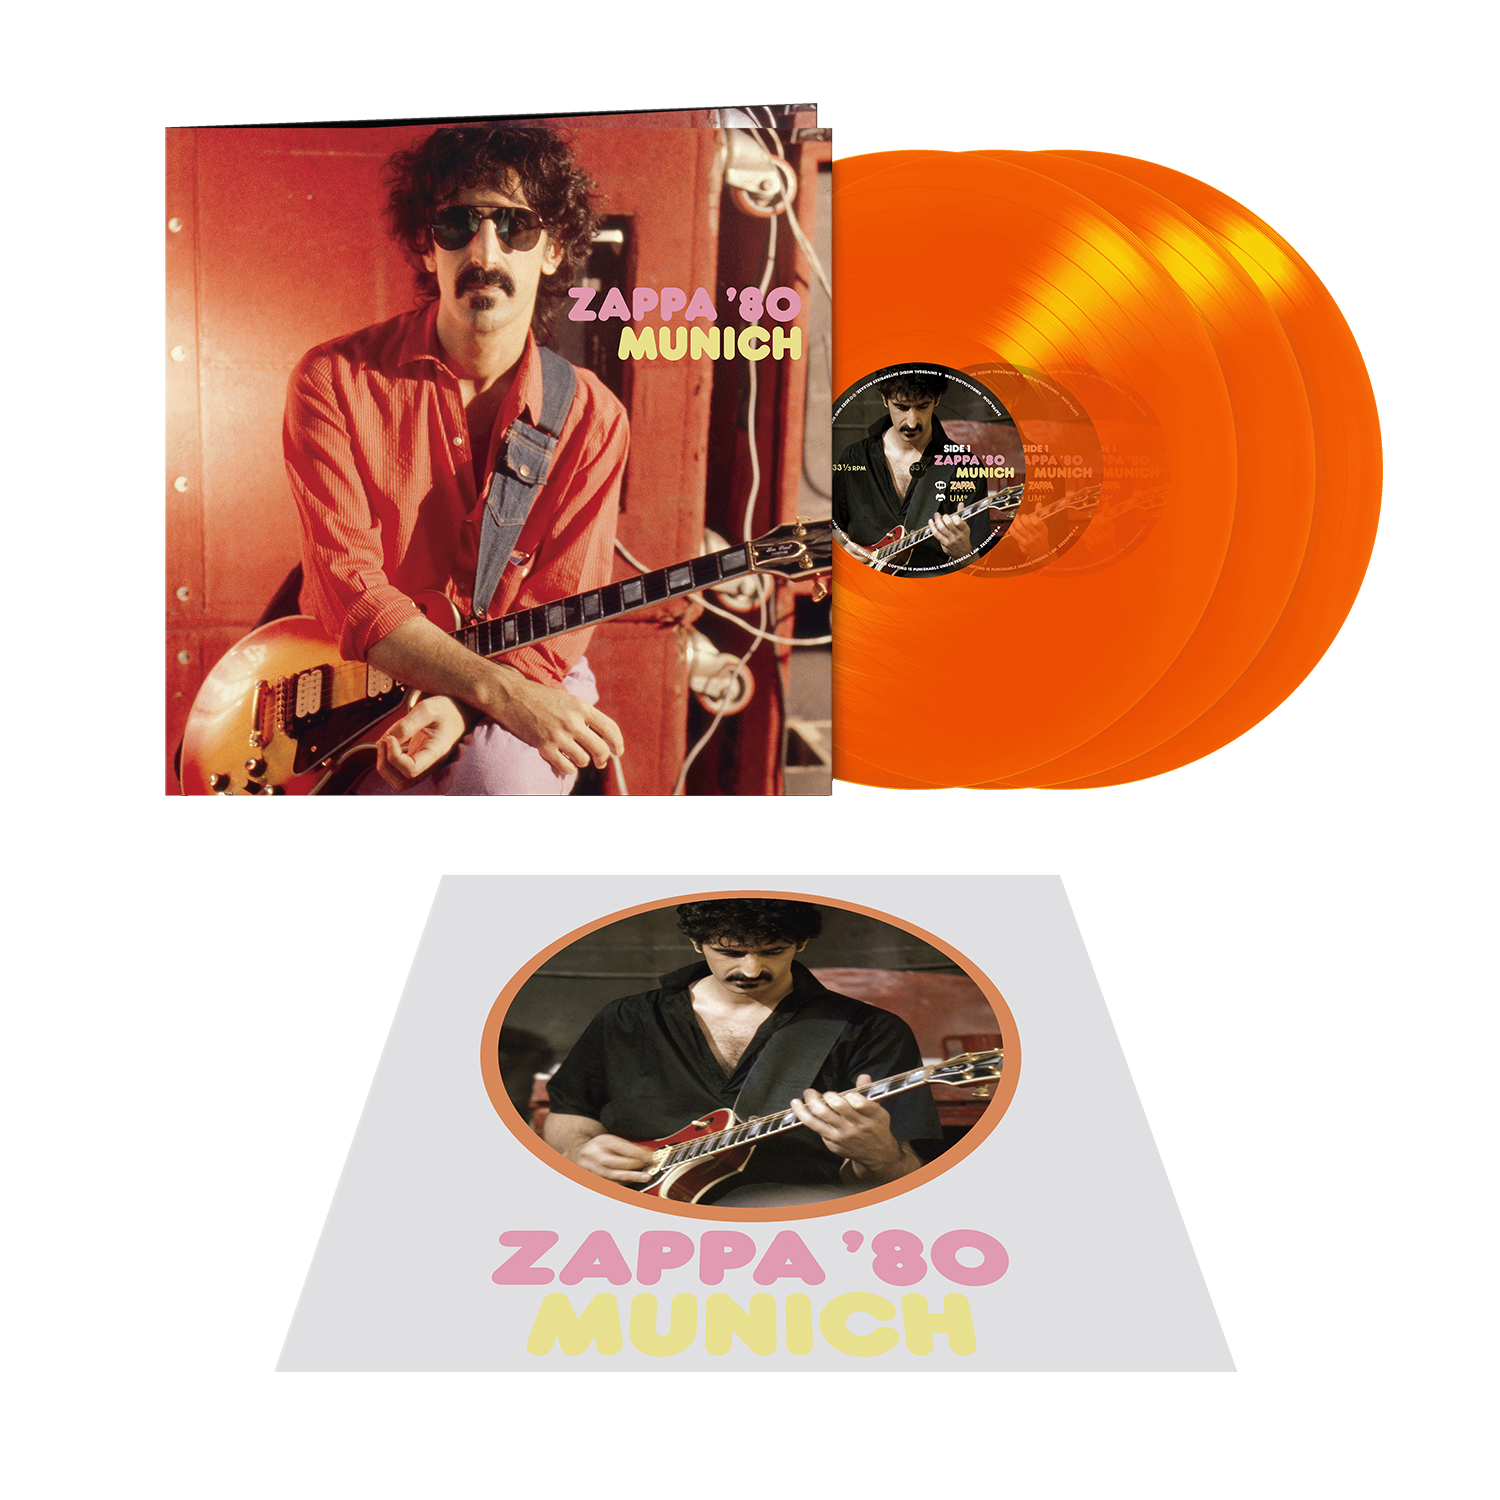 Frank Zappa - Zappa ’80: Munich: Exclusive Transparent Orange Vinyl 3LP + Iron-On Transfer